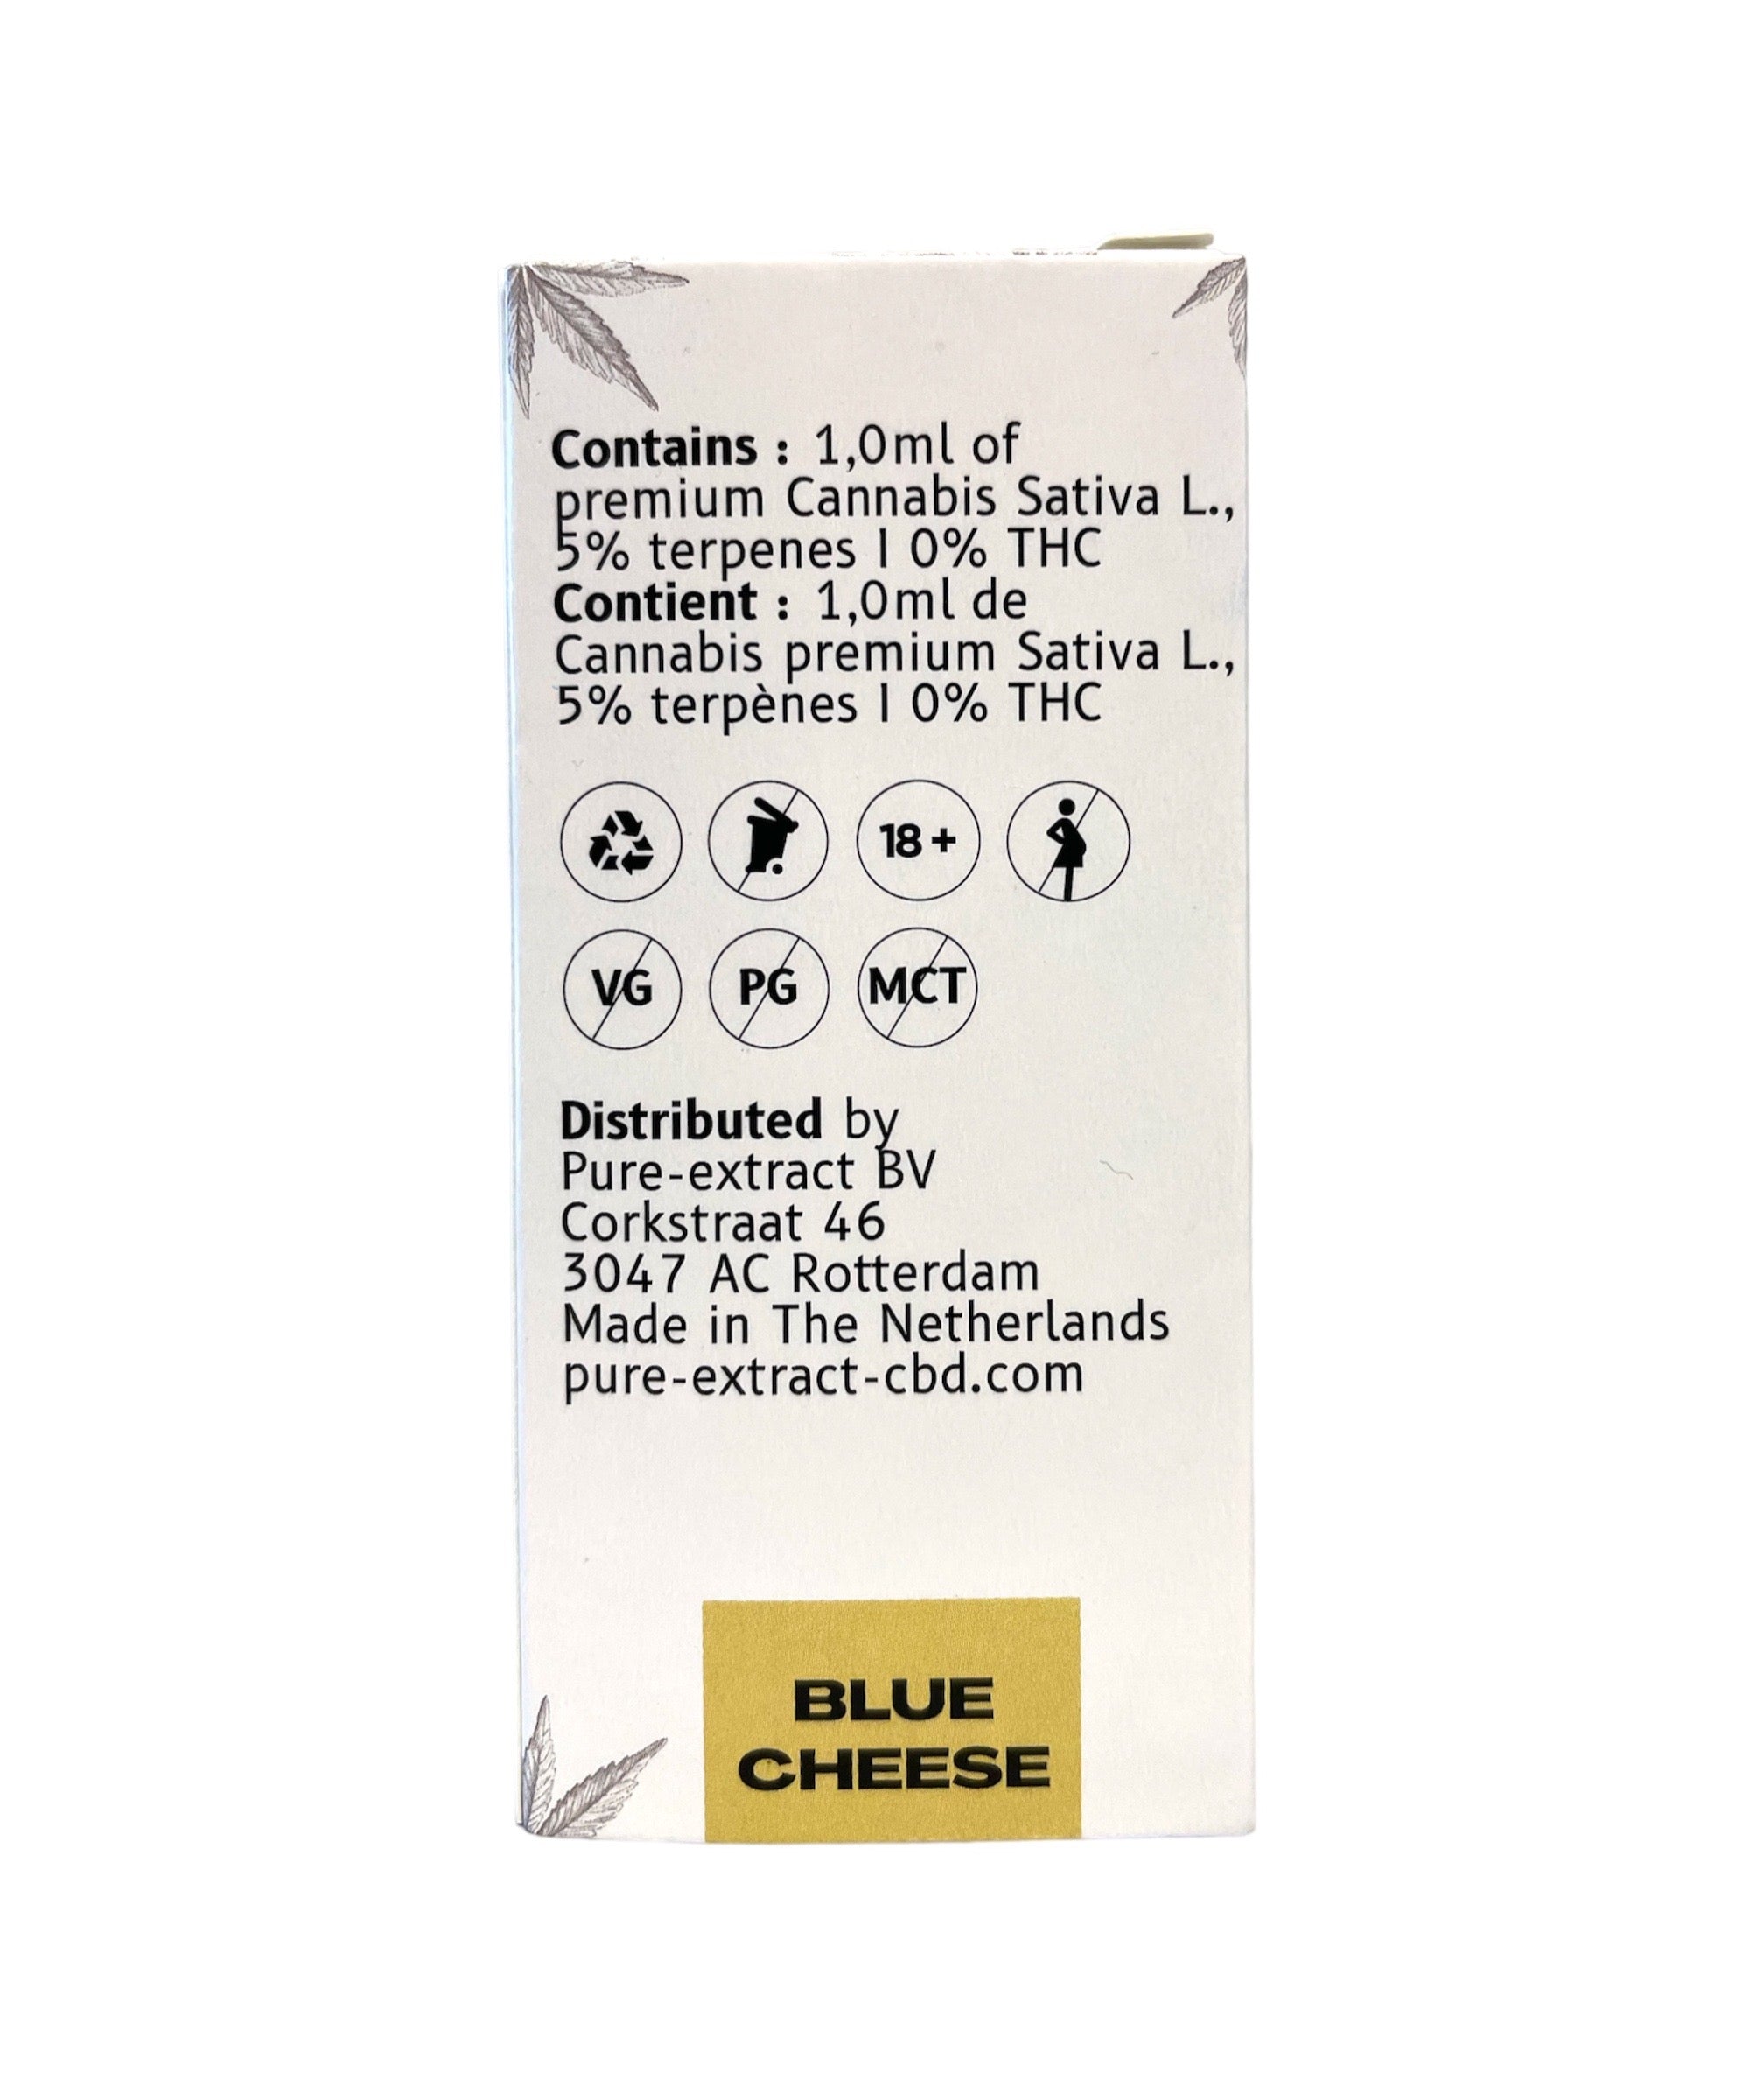 Pure Extract CBD Cartridge (Dab Pen) by H4CBD - Blue Cheese - 95% H4CBD - 1ML - 600 puffs